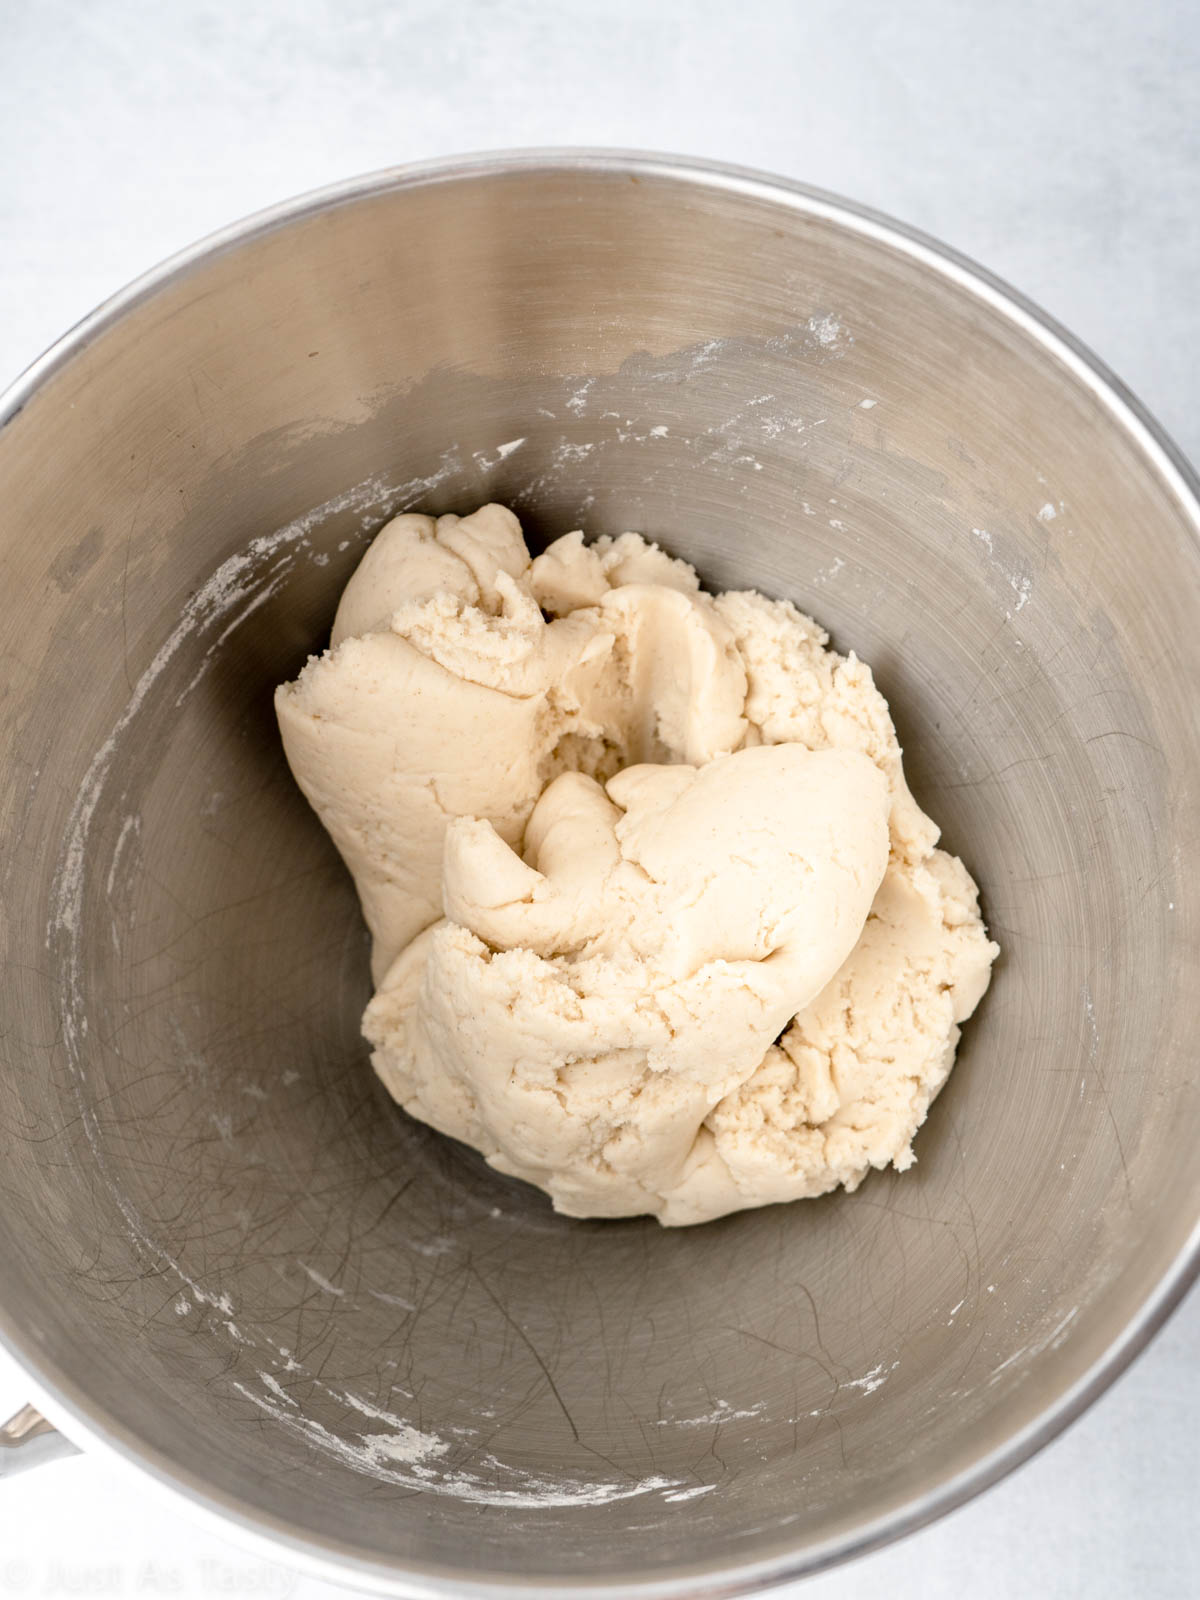 Cinnamon roll dough in a bowl.